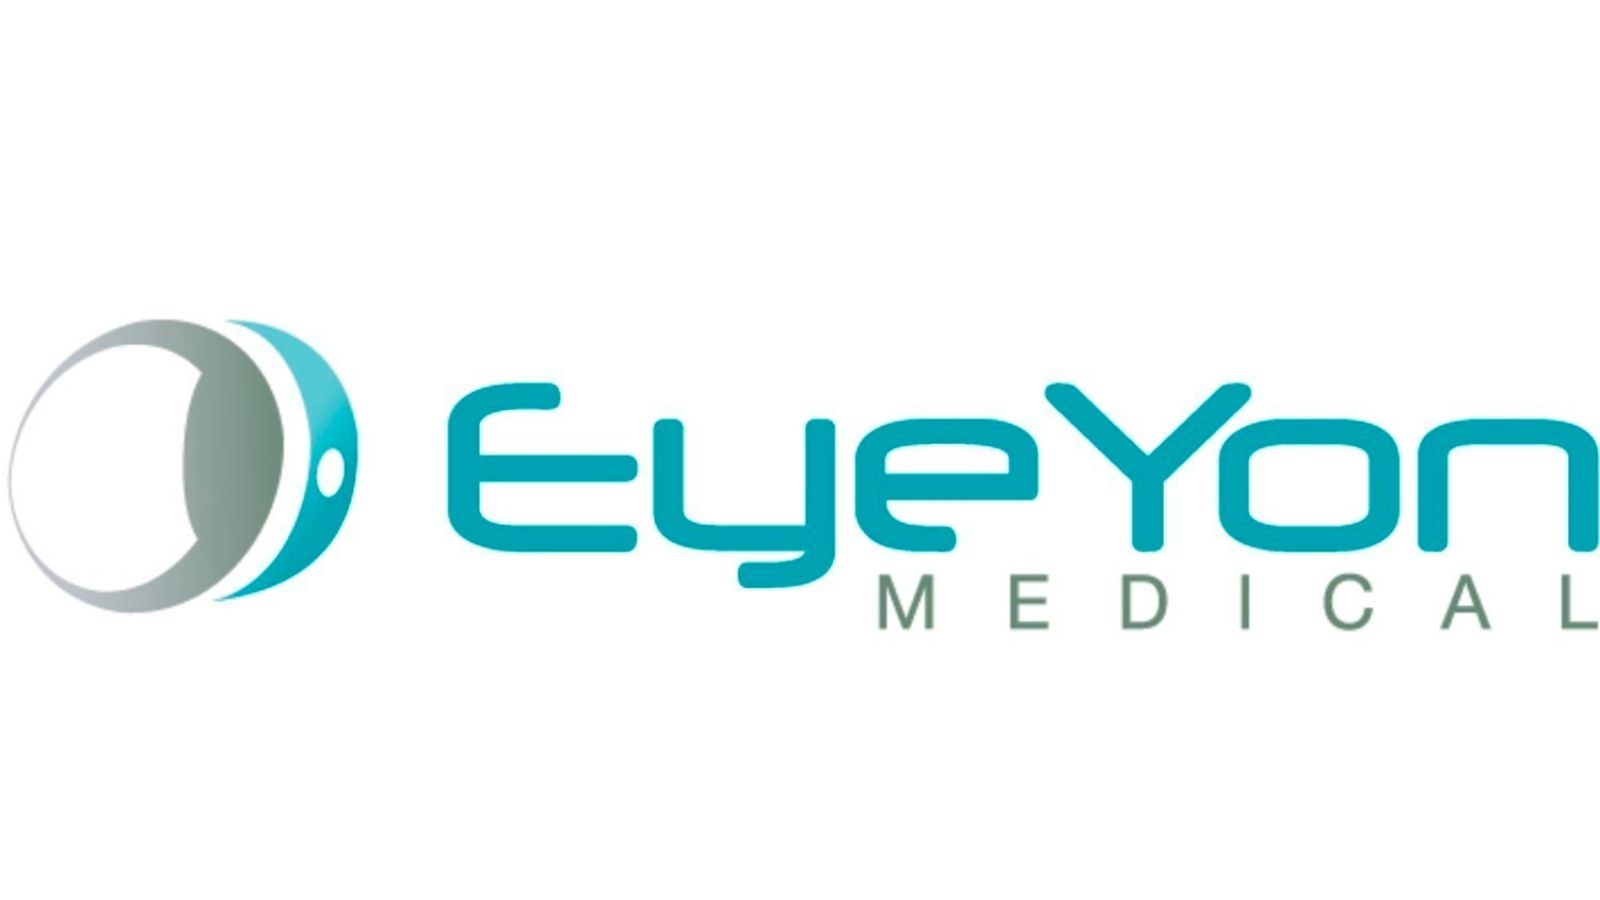 EyeYon——治疗性隐形眼镜和聚合植入物